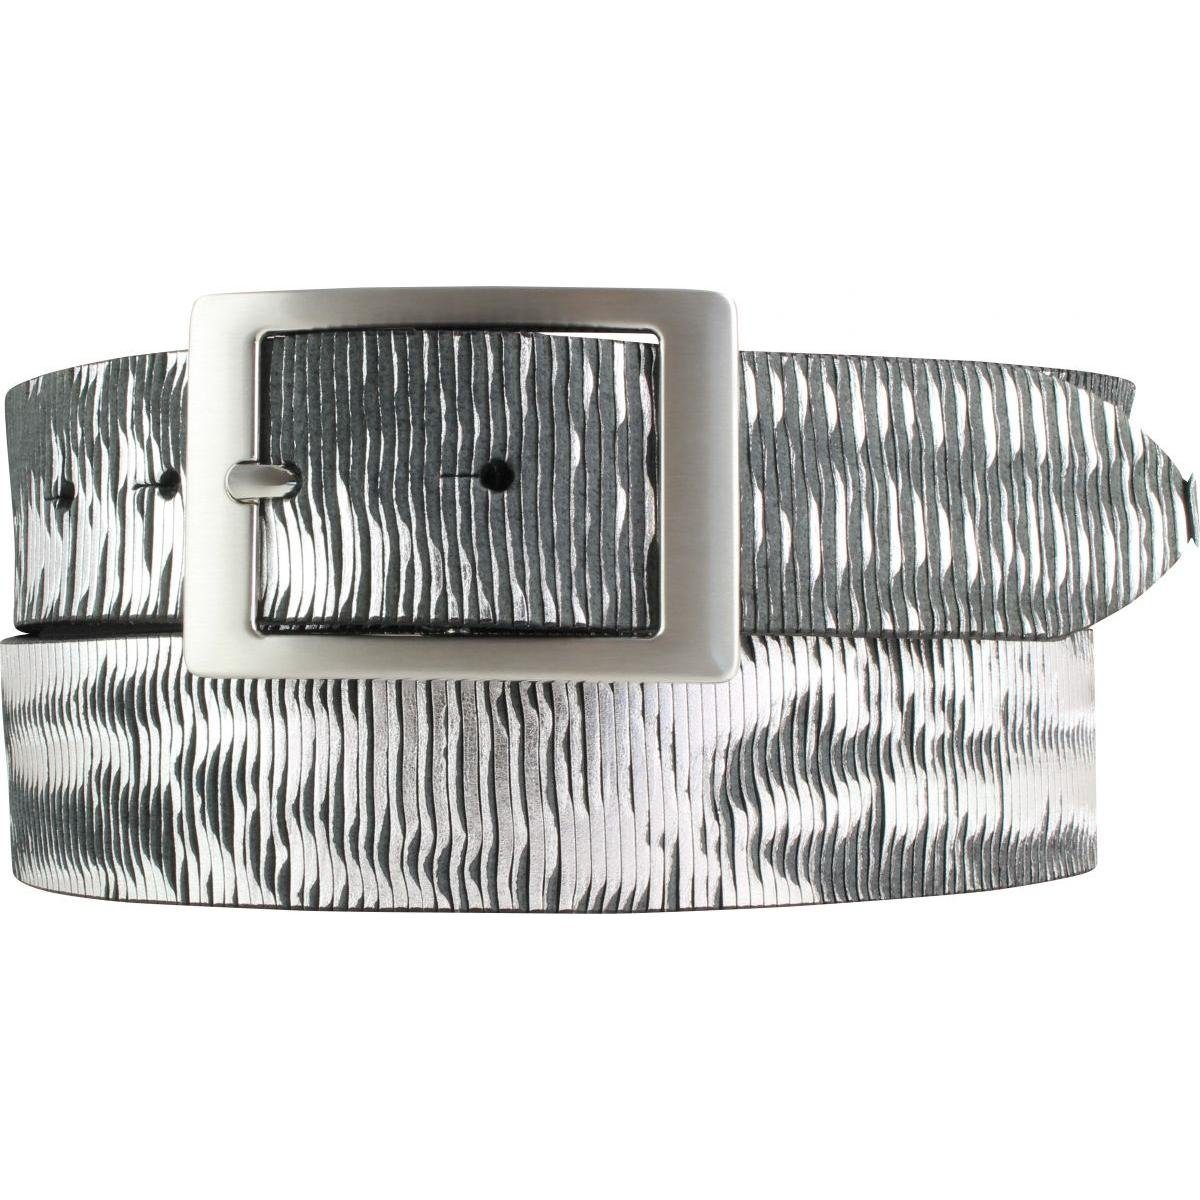 BELTINGER Ledergürtel Herren-Gürtel aus Vollrindleder Metall-Optik mit Doppel-Schließe 4 cm Schwarz Metallik, Silber